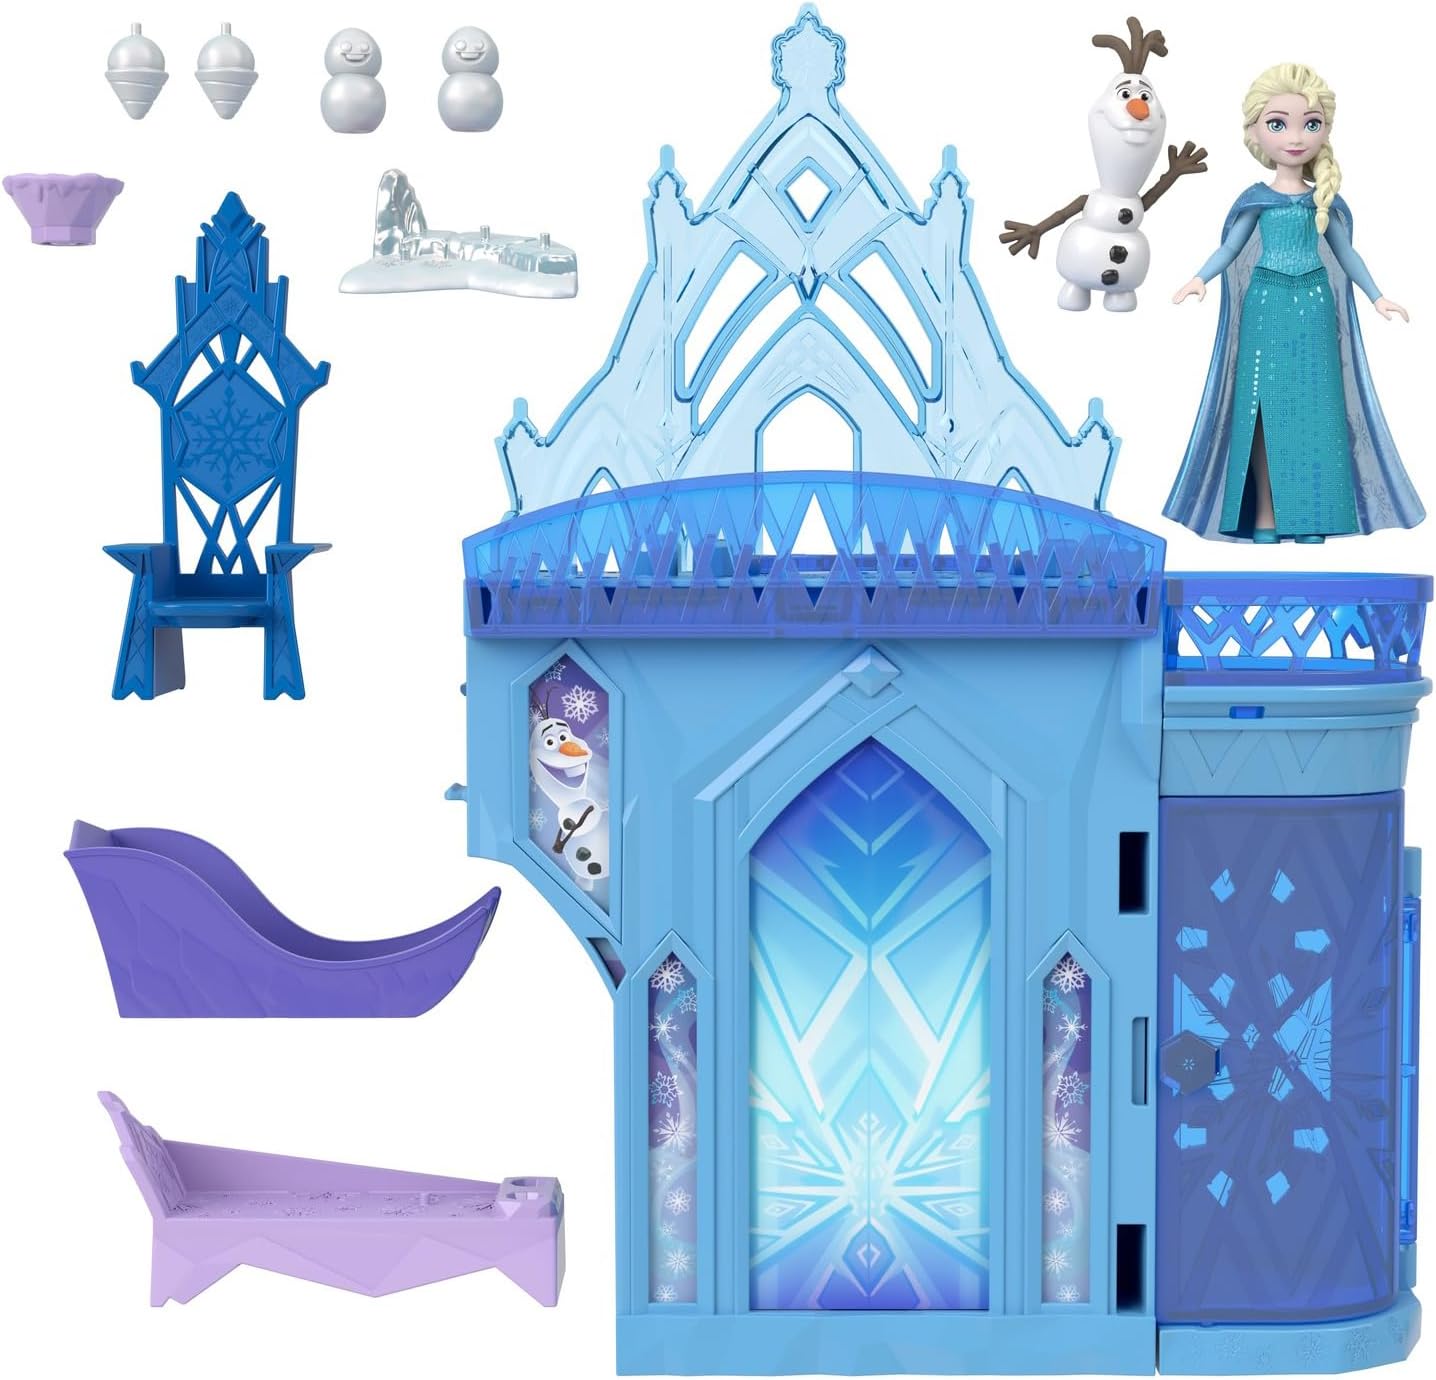 Disney Frozen - Elsa's Ice Palace With Olaf HLX00